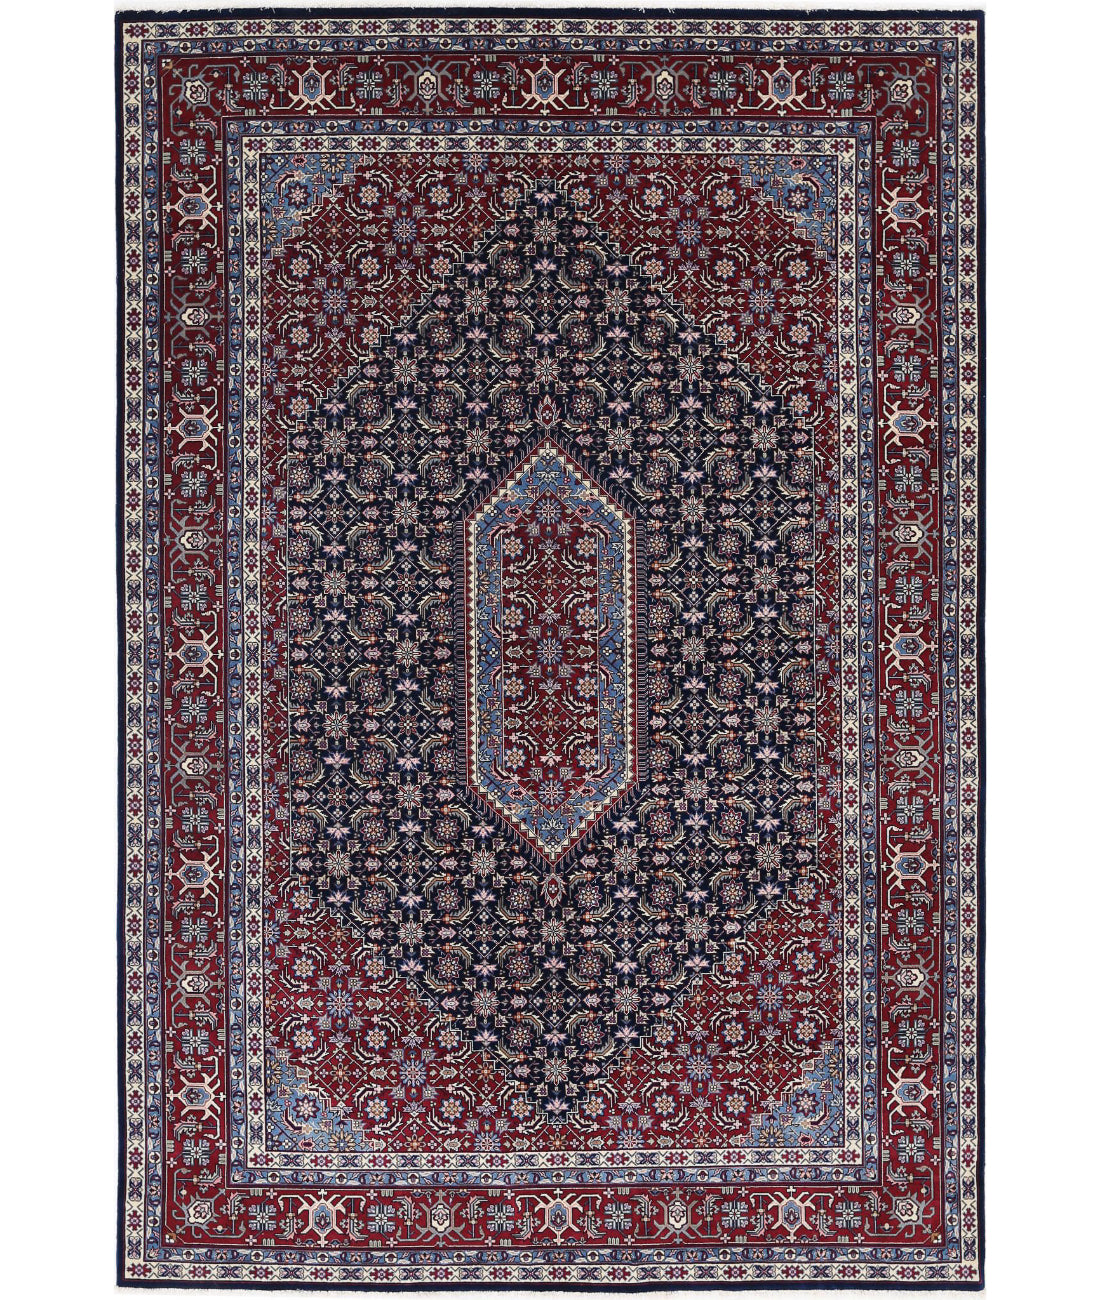 Heritage-hand-knotted-pak-persian-wool-rug-5025292.jpg